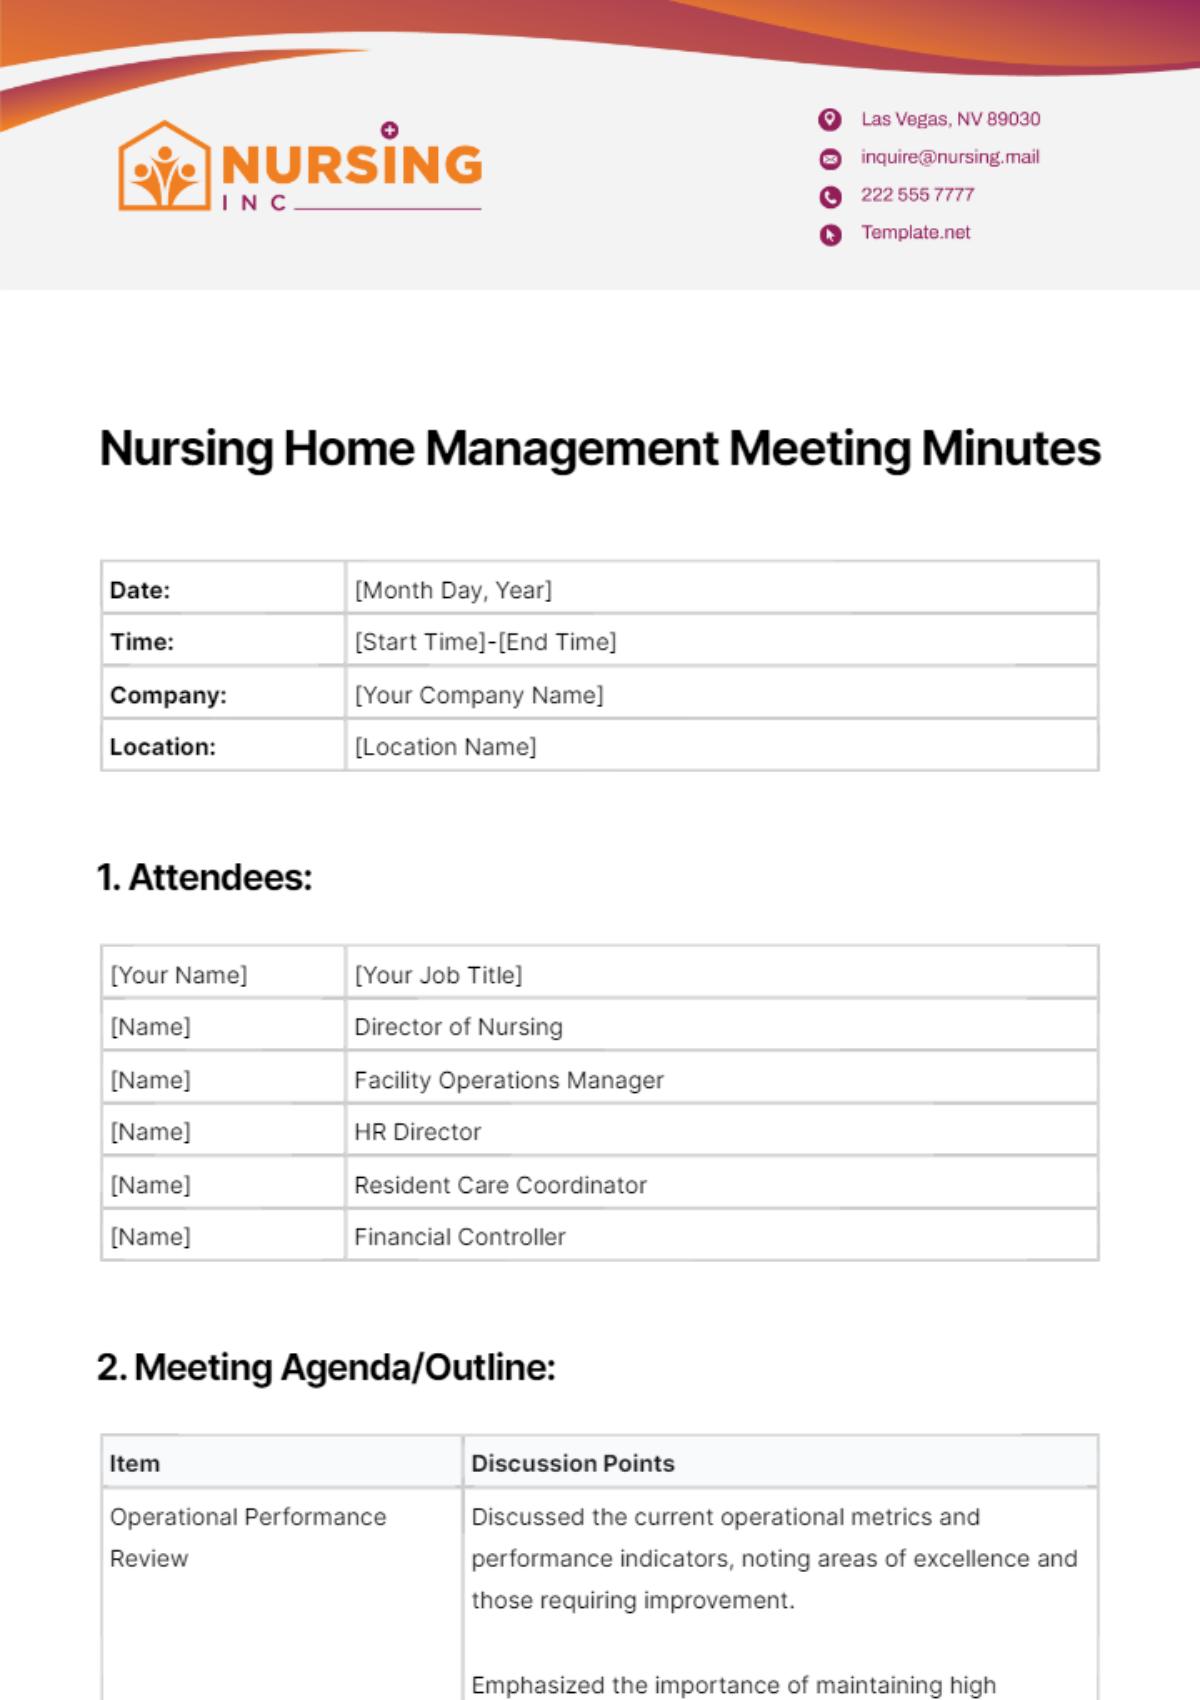 Nursing Home Management Meeting Minutes Template